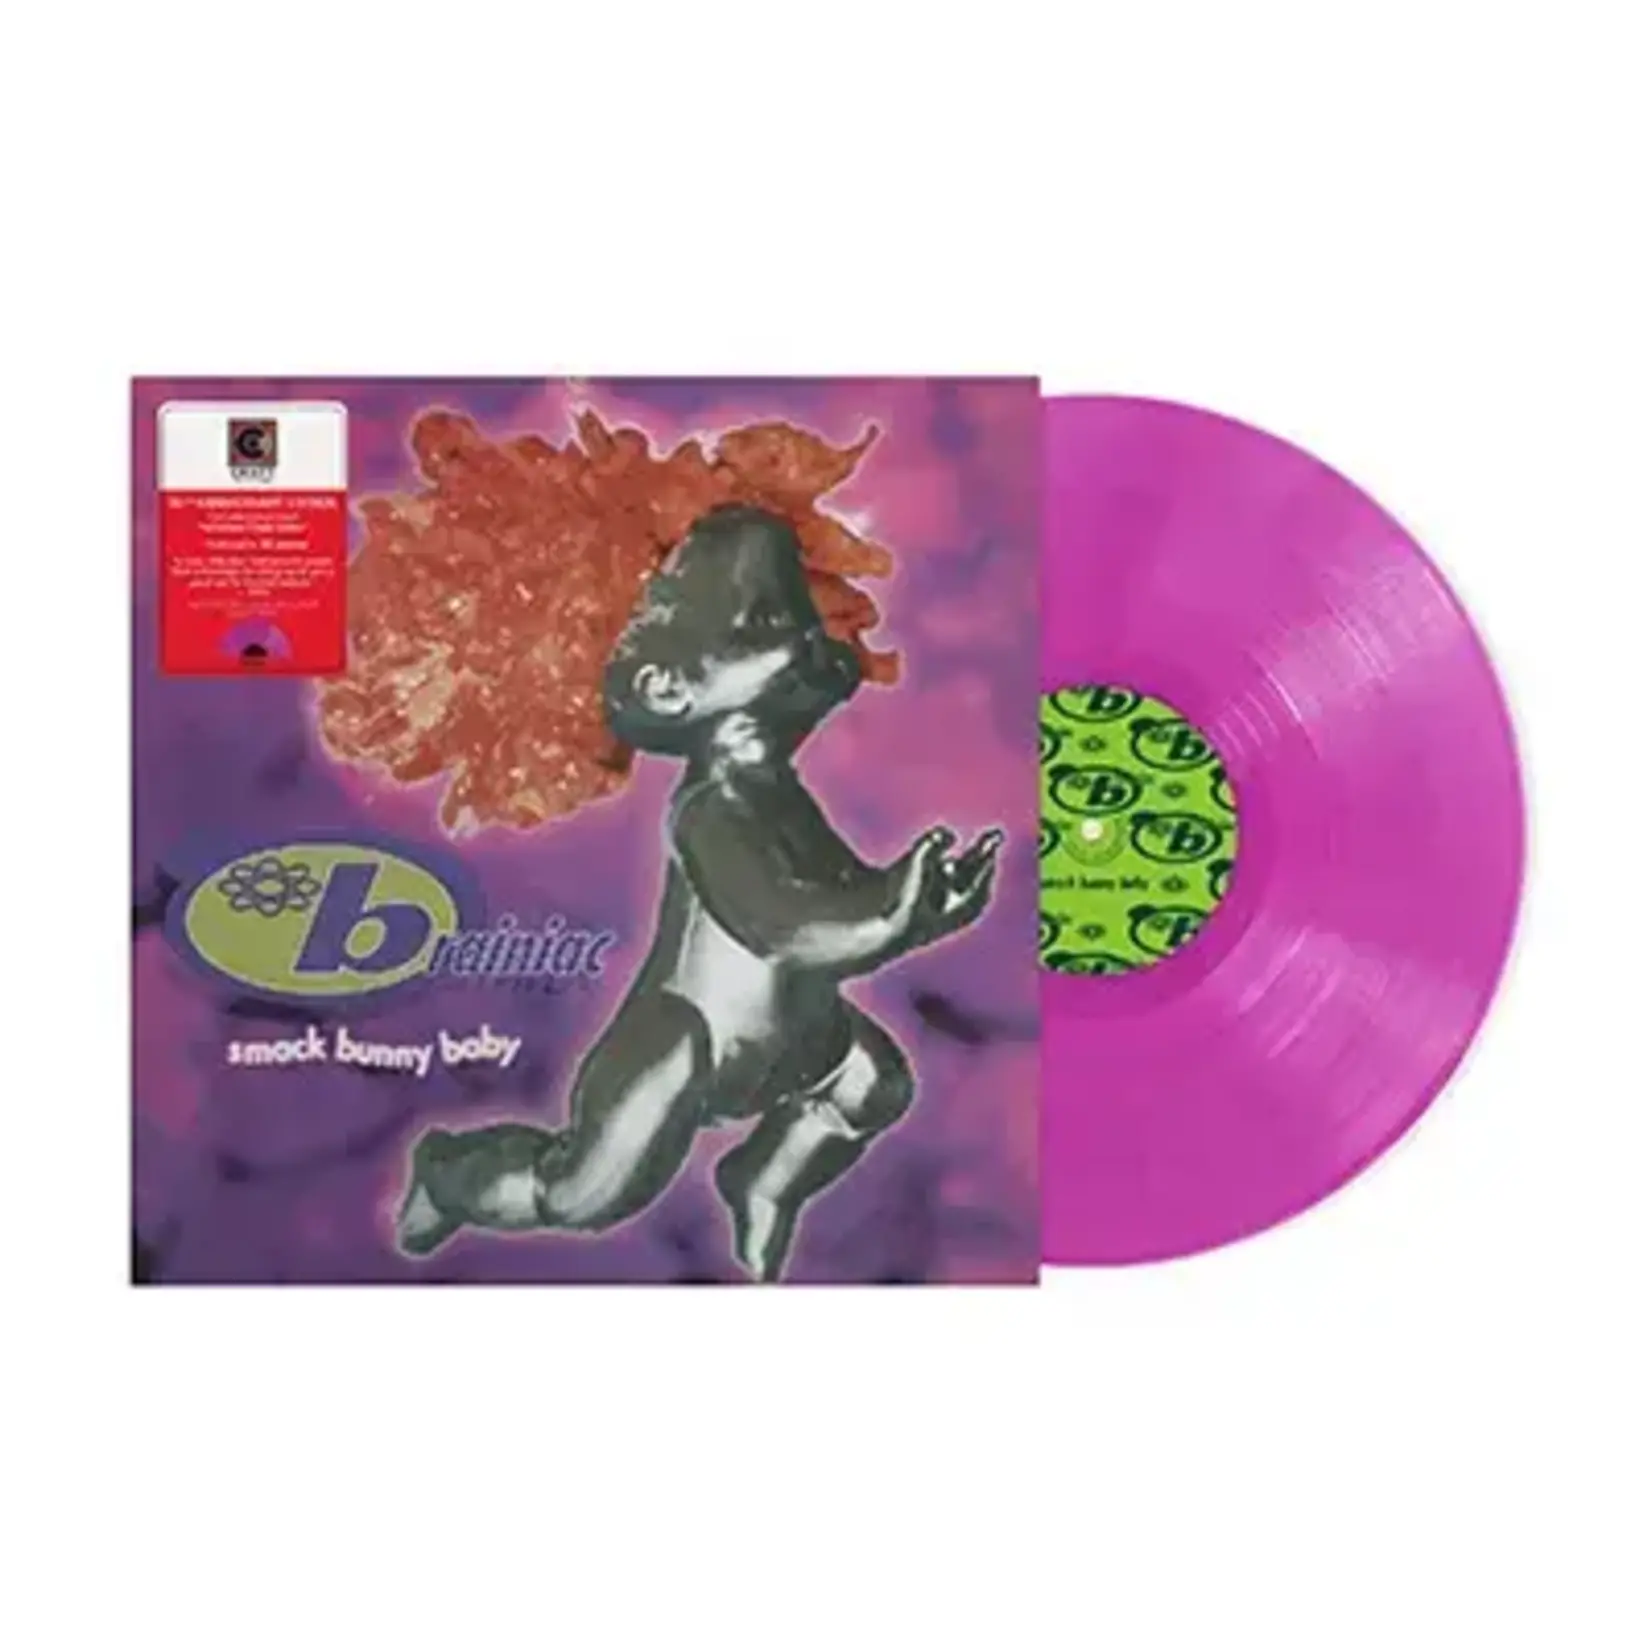 [New] Brainiac - Smack Bunny Baby (30th Anniversary Editiion, violet vinyl, indie exclusive)